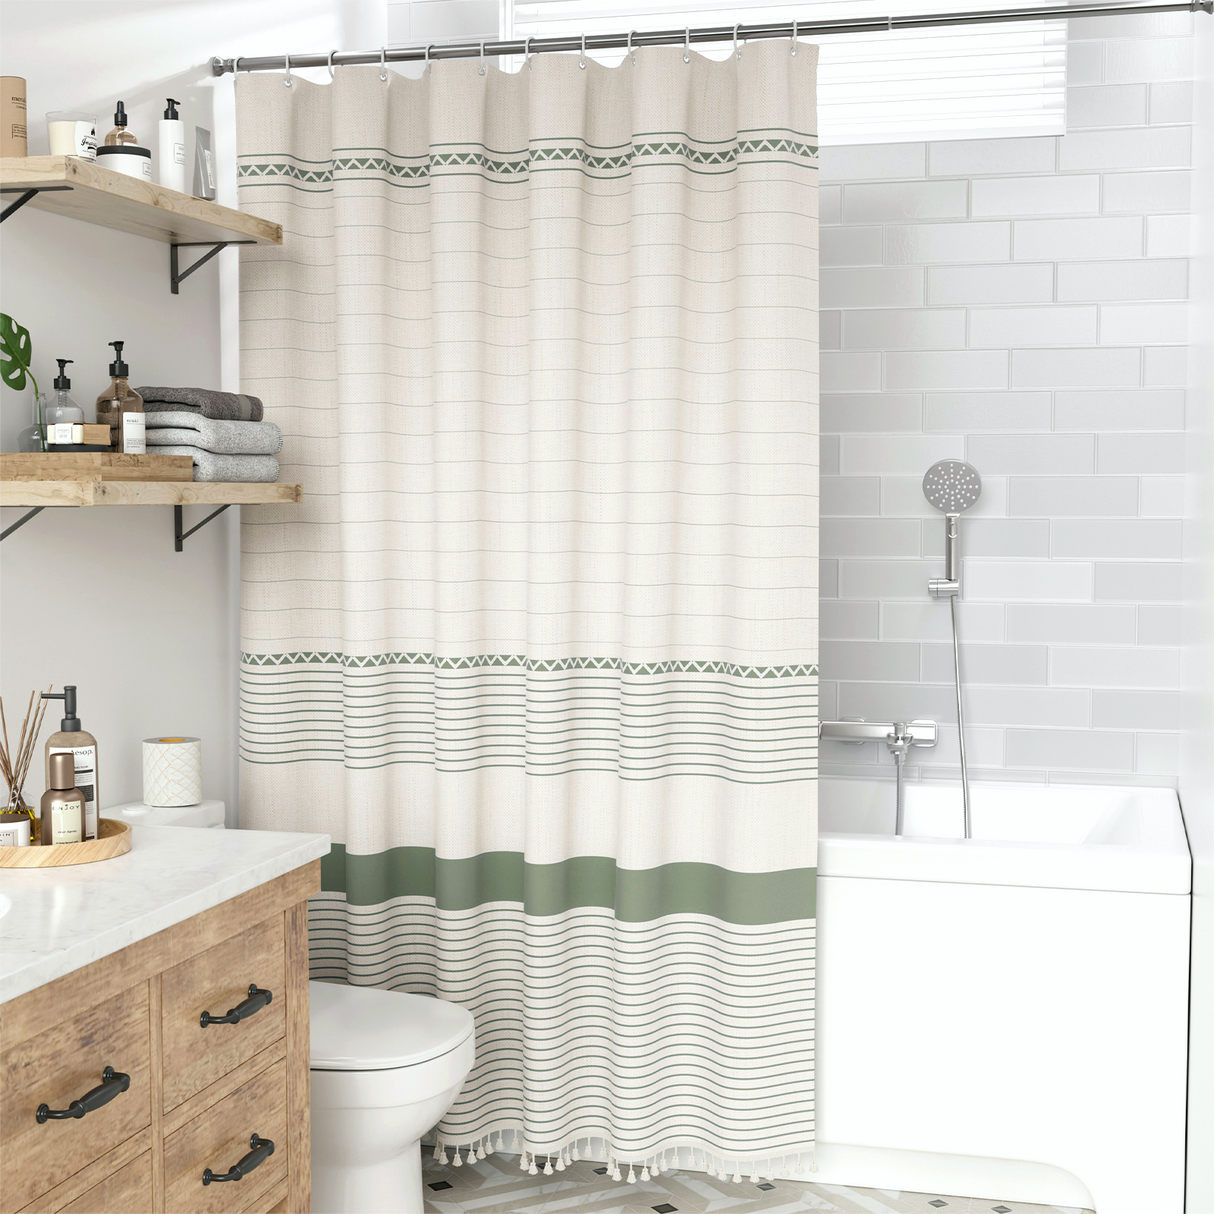 AmazerBath Farmhouse Linen Shower Curtain with Tassel, 72"x72", Sage Green